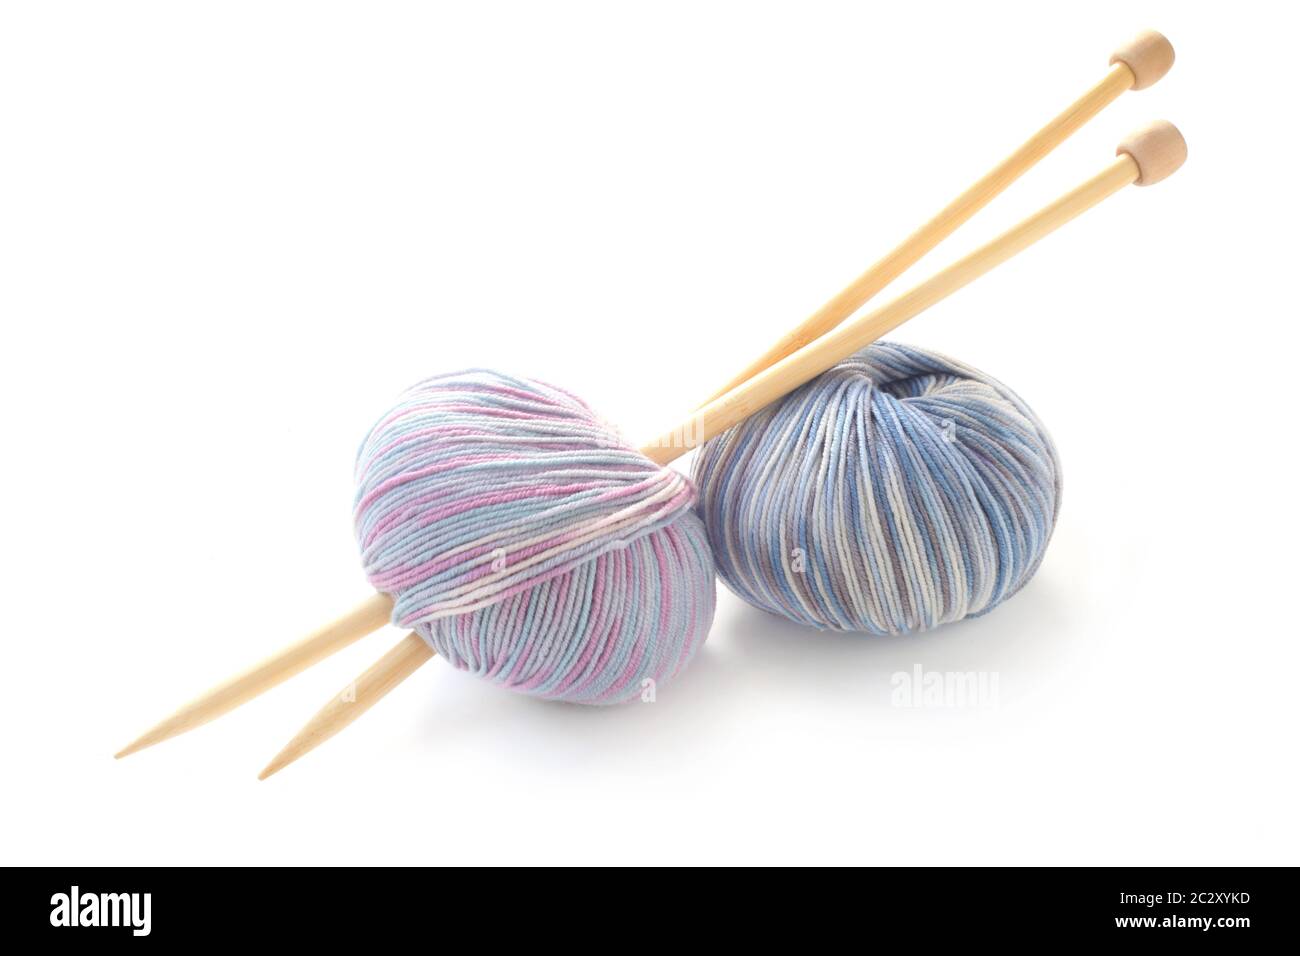 Wool And Knitting Needles Stock Photo